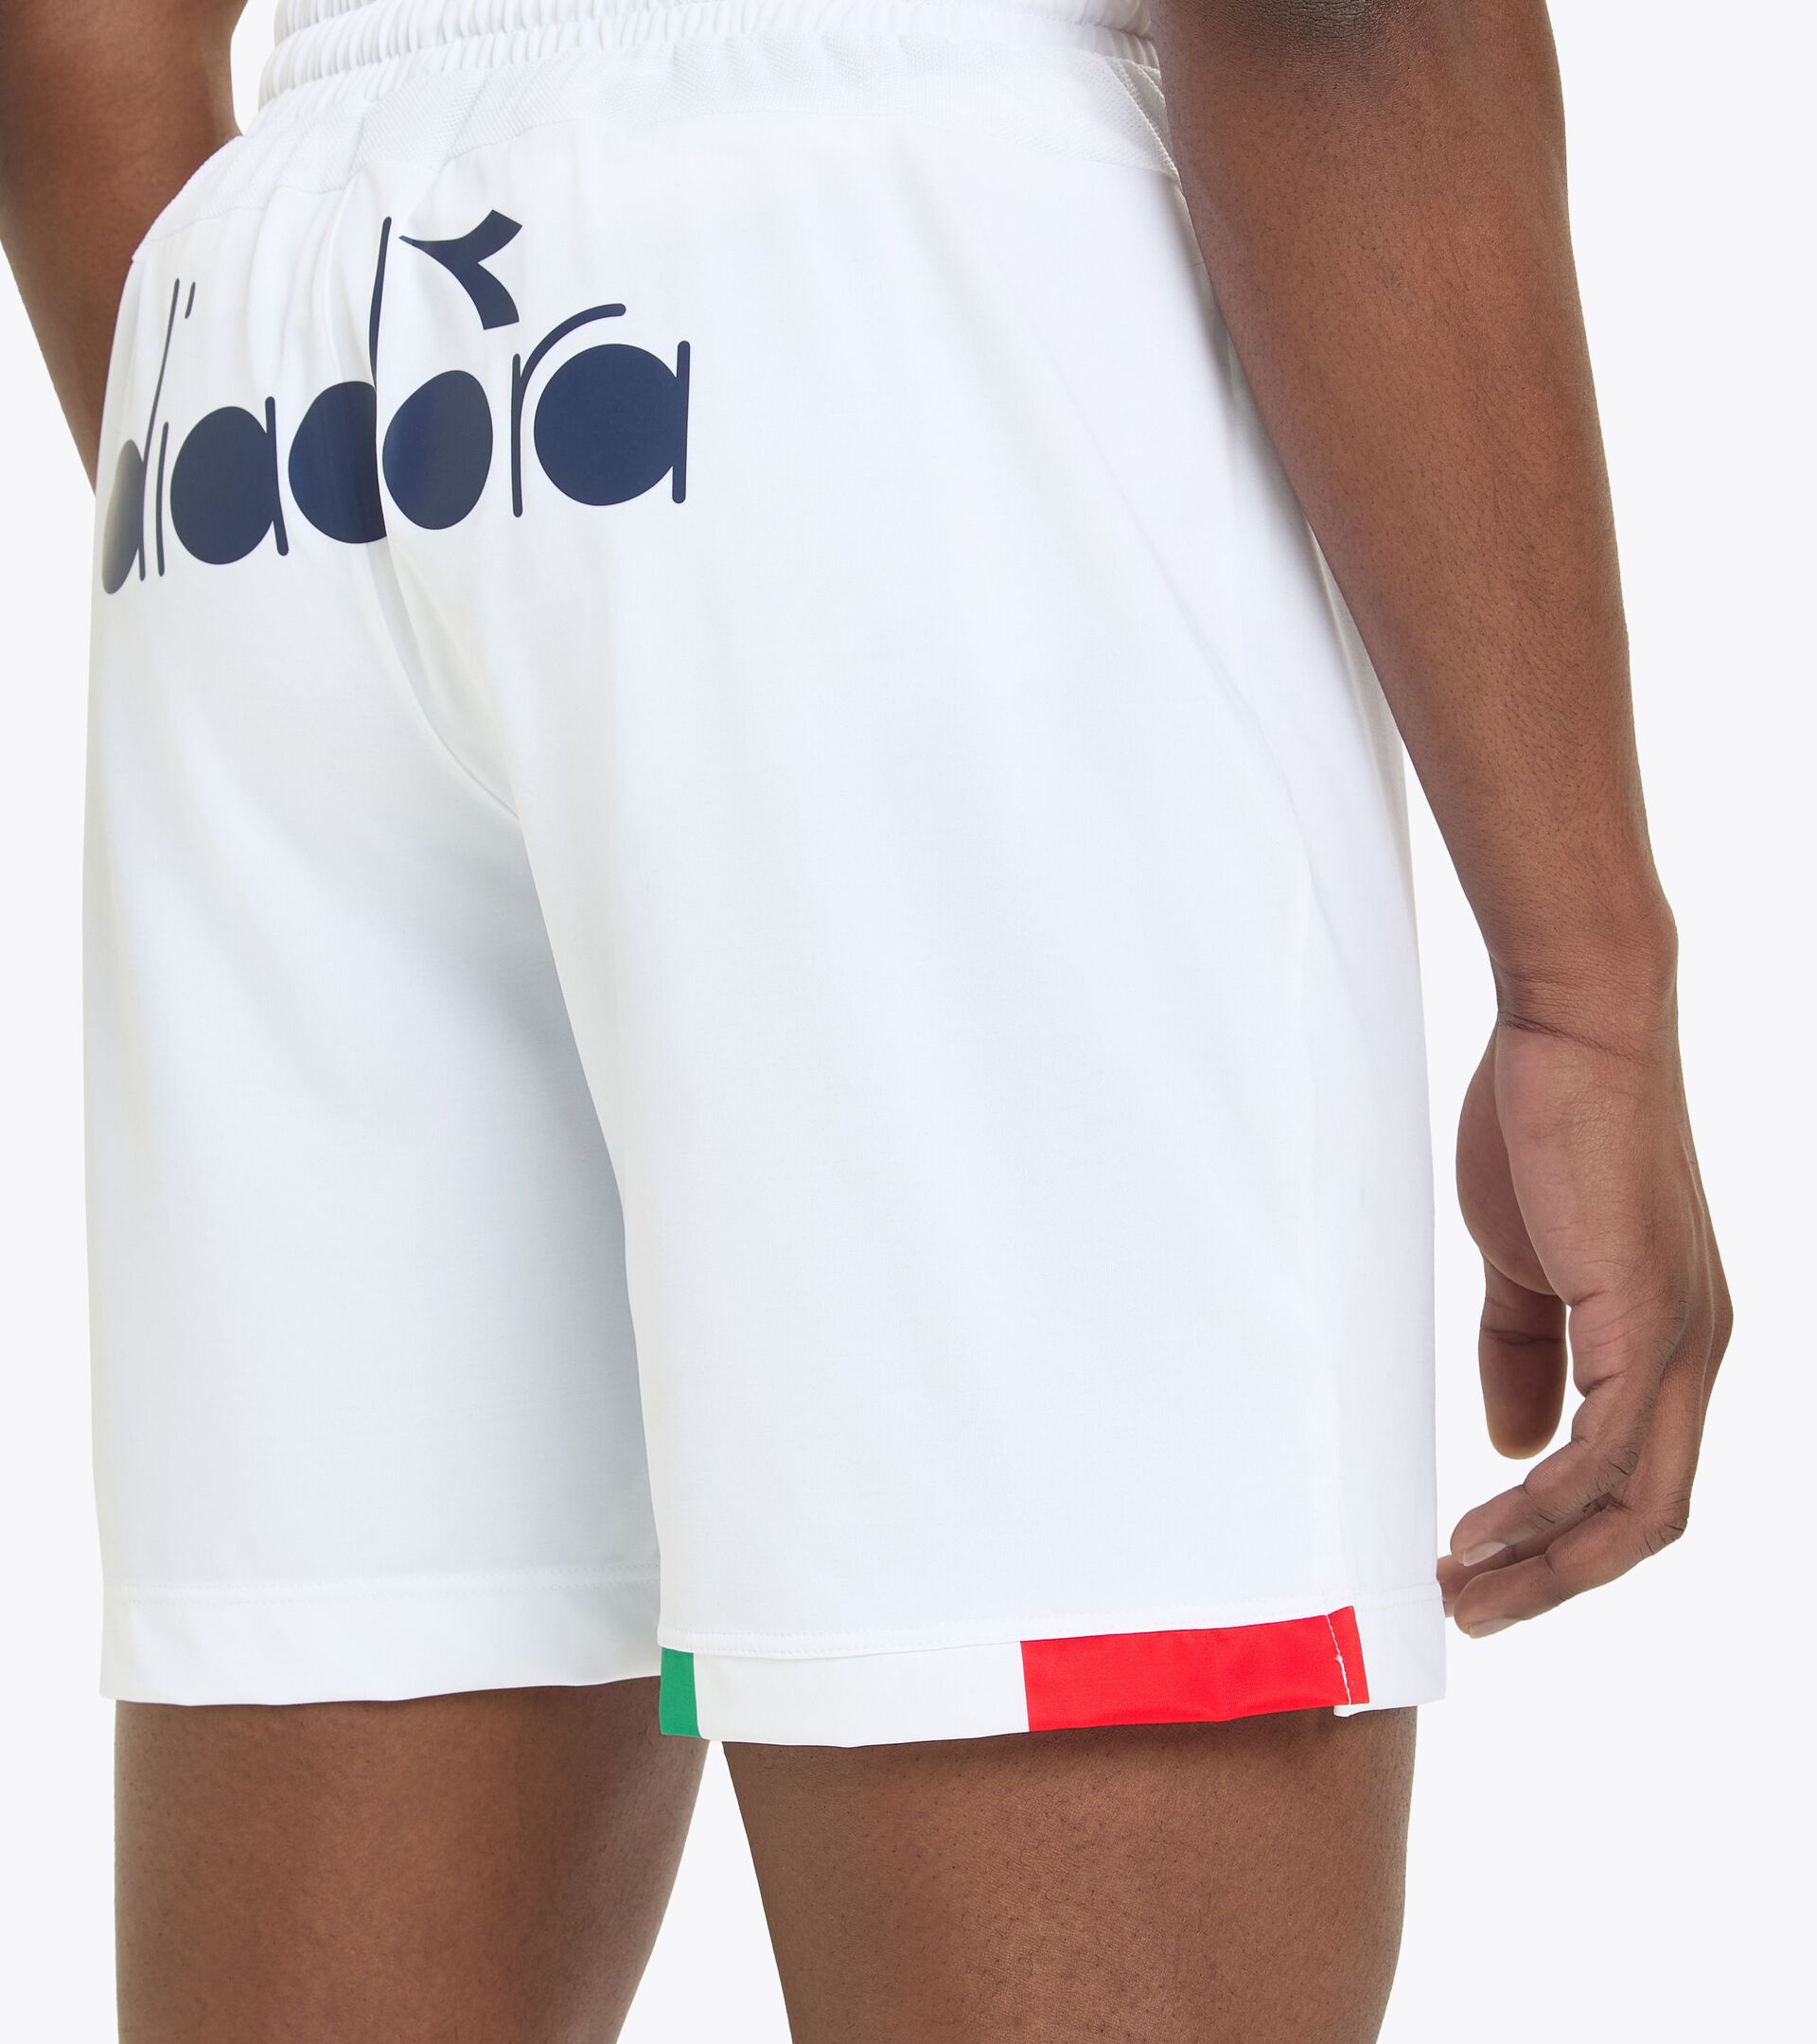 Competition shorts Men - Italy National Volleyball Team SHORT GARA UOMO BV ITALIA OPTICAL WHITE - Diadora